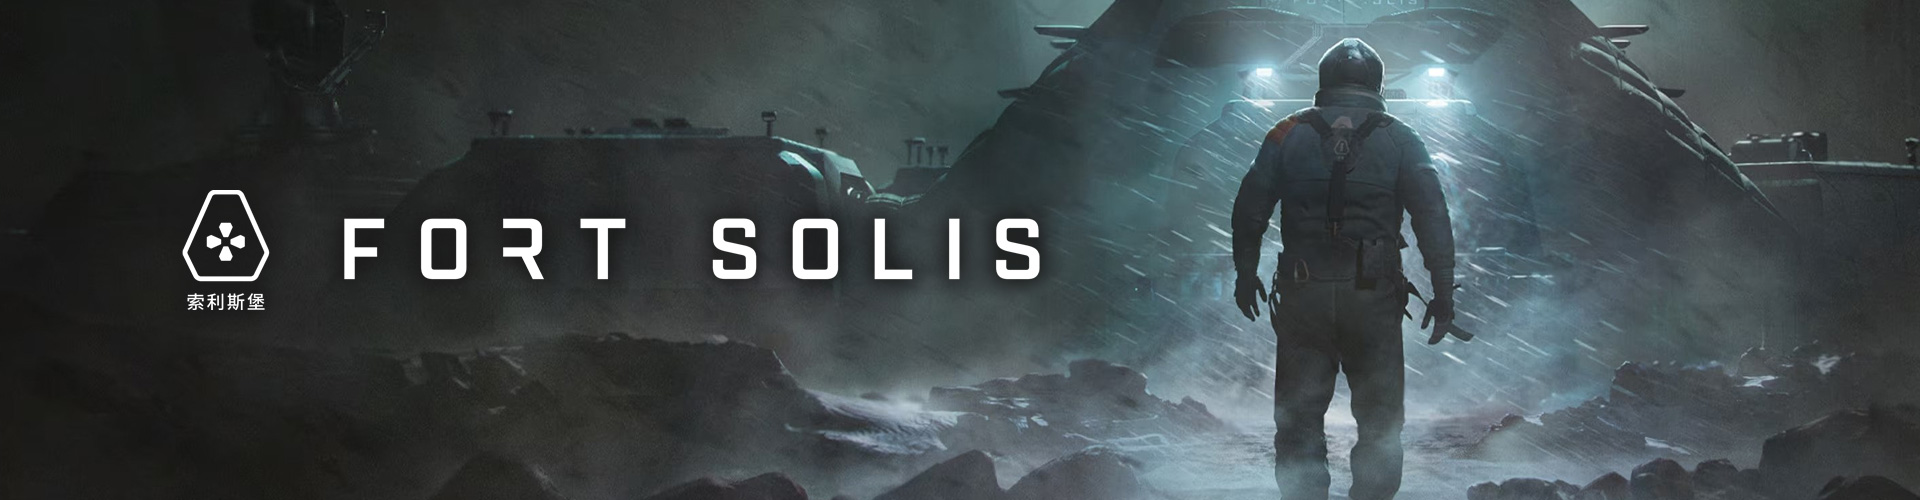 Fort Solis: un thriller de terror de ciencia ficciÃ³n